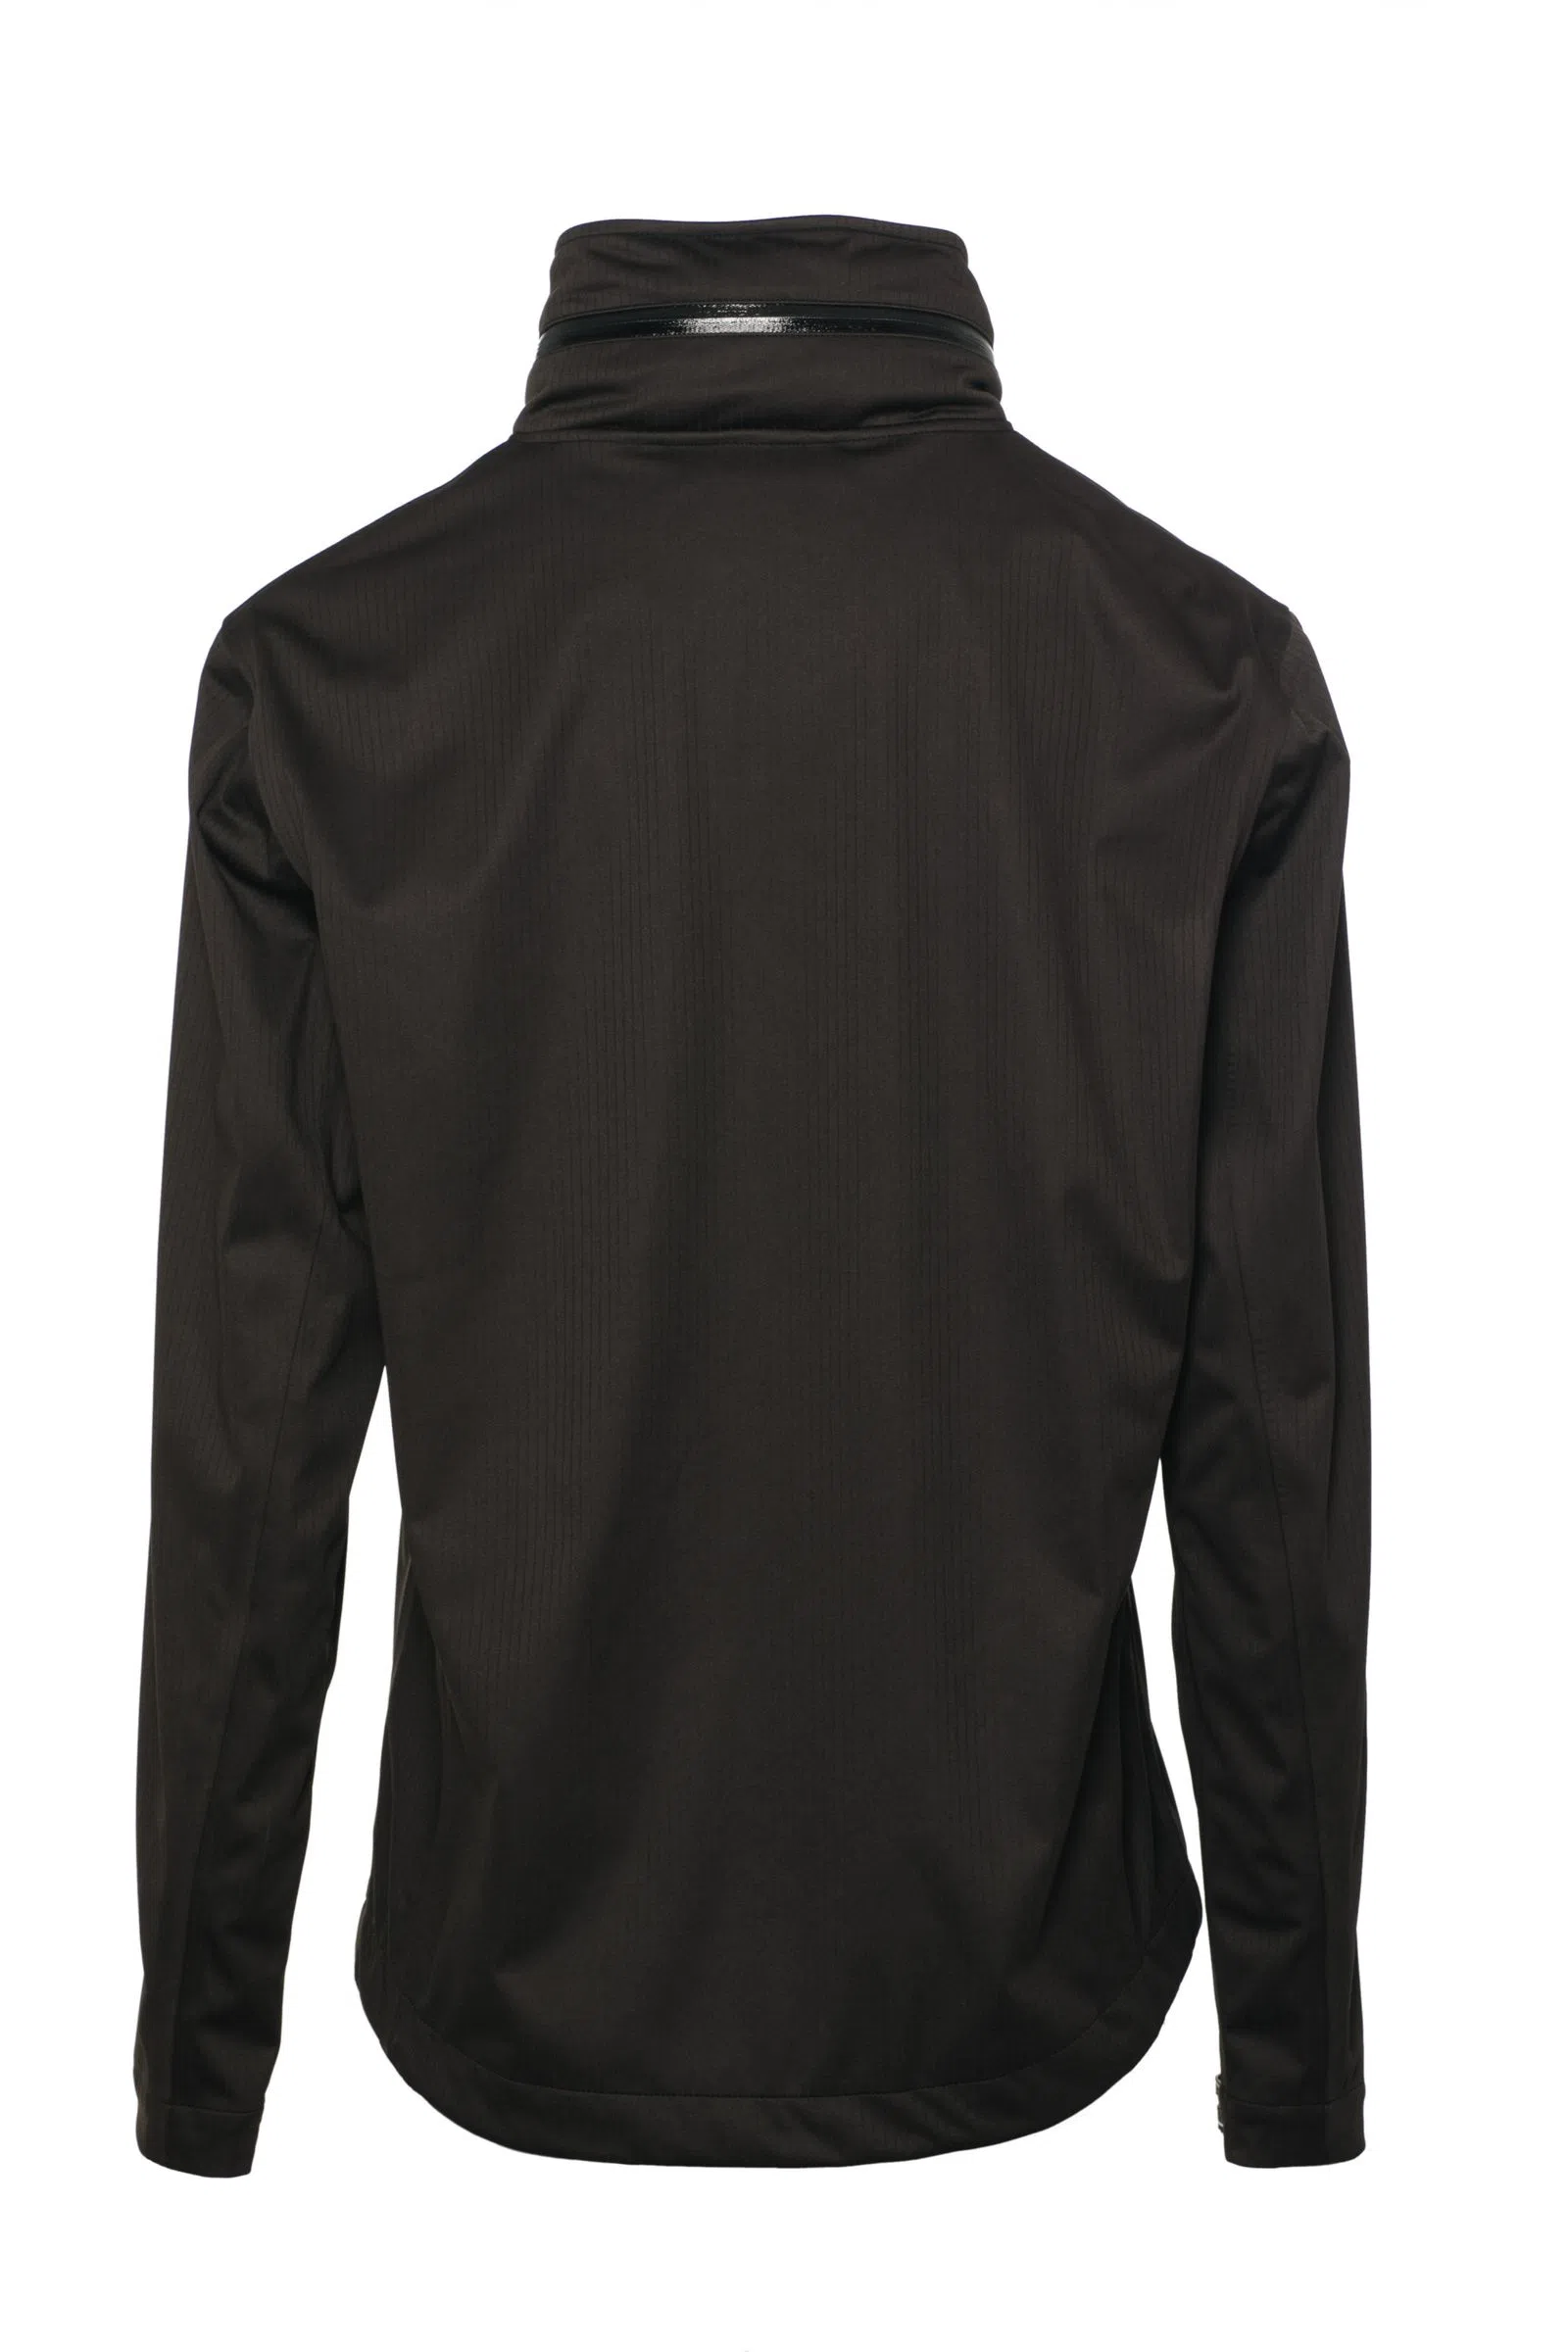 Chubasquero para hombre, Milis All-Year-Jacket, impermeable, negro